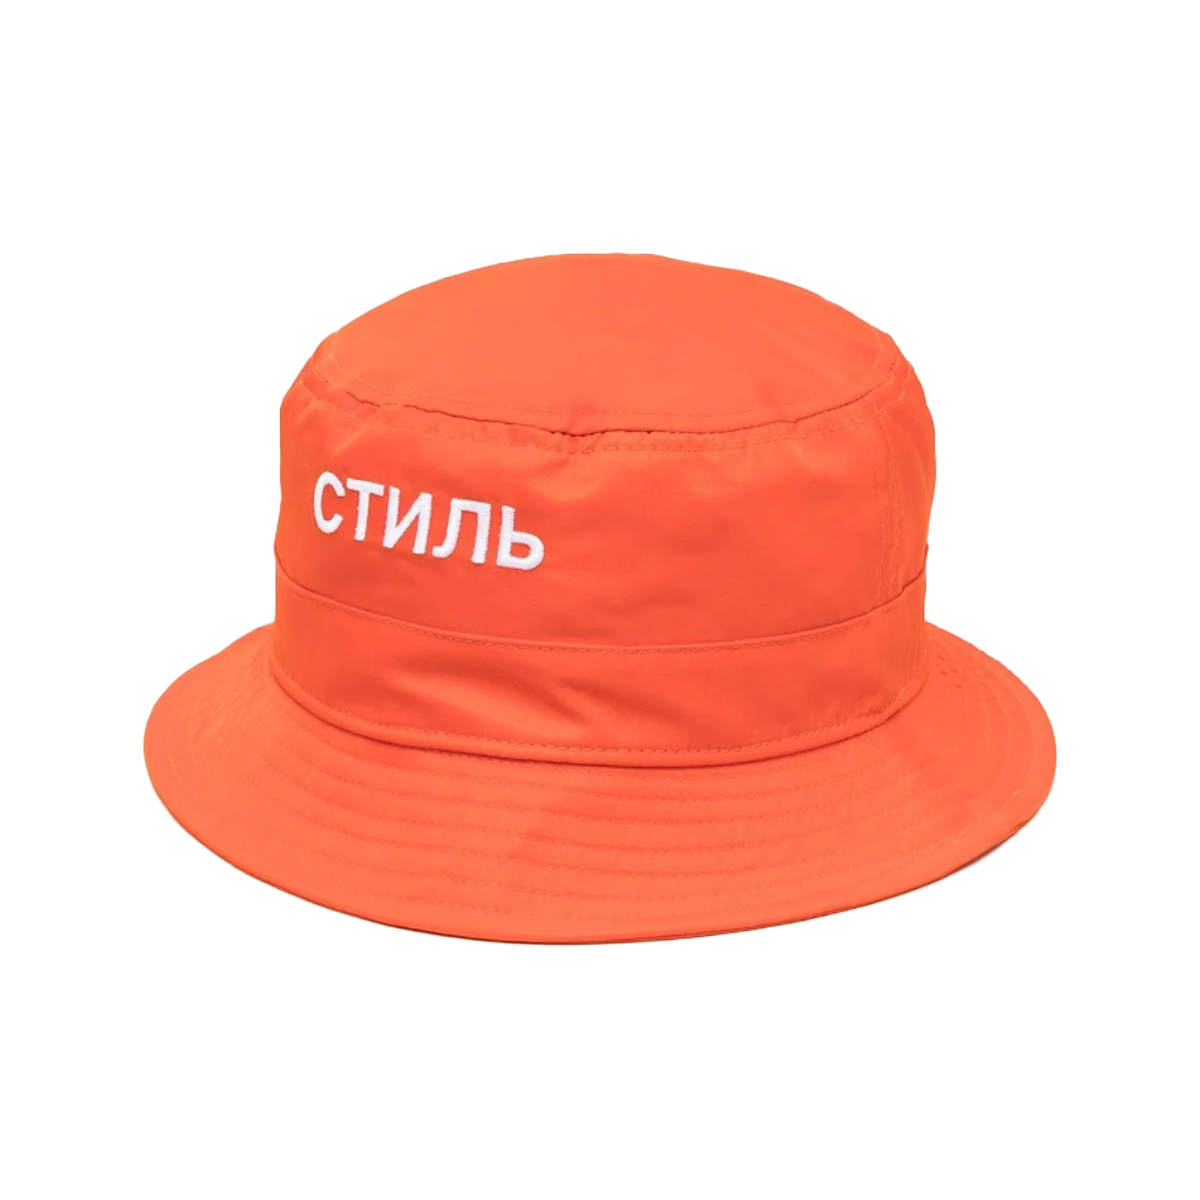 CTNMB Bucket hat orange